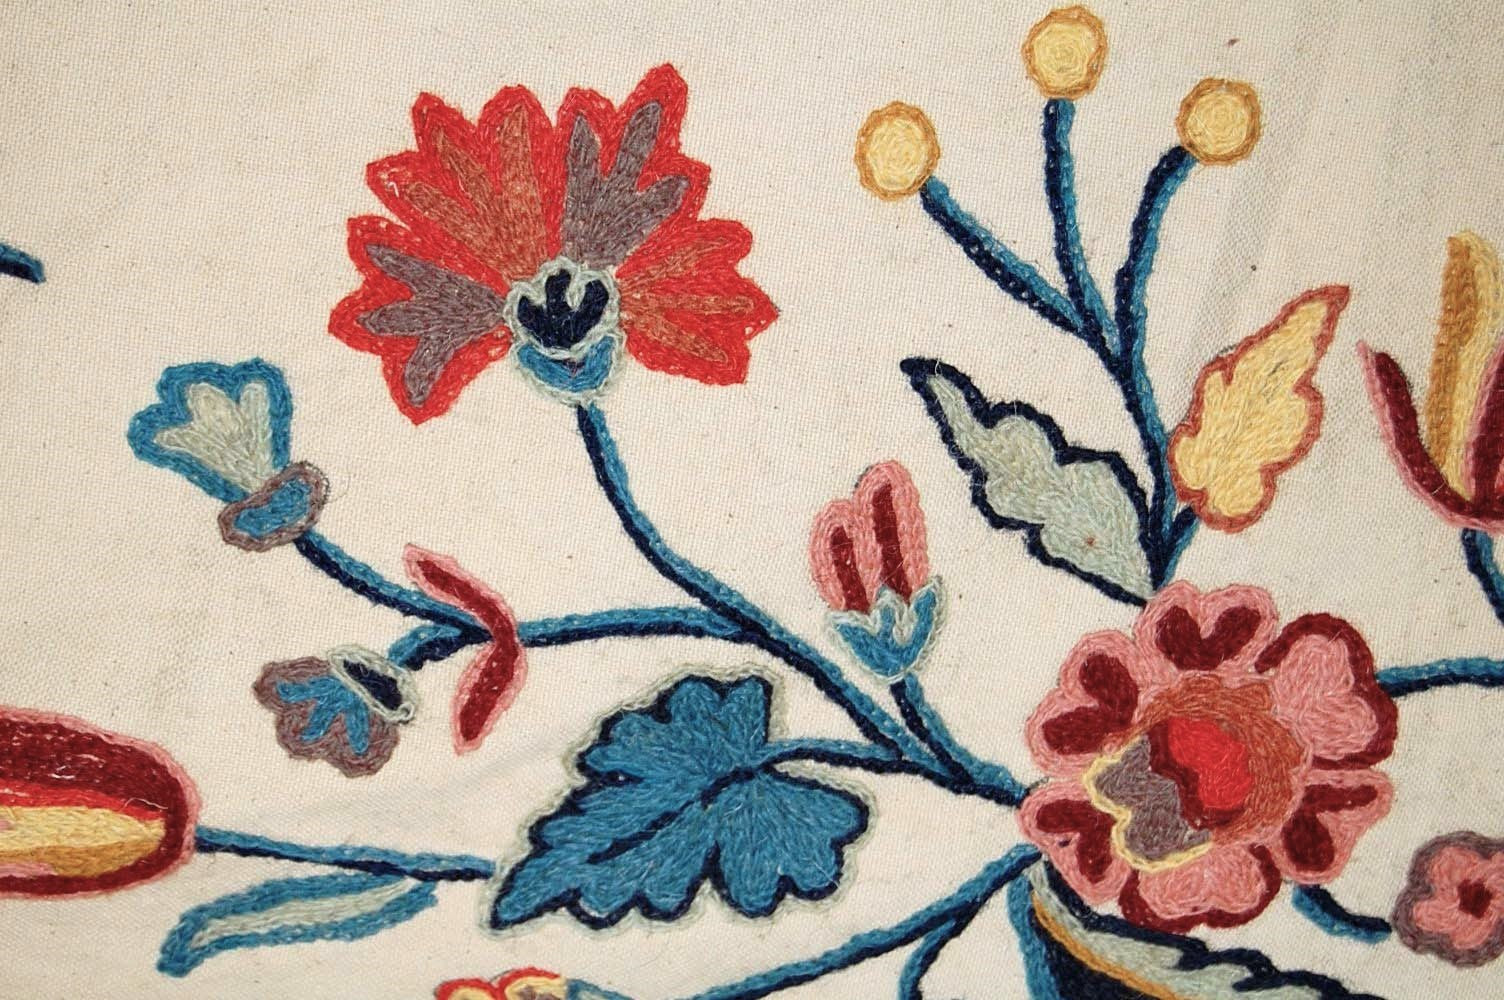 Cotton Crewel Embroidered Fabric Beige, Multicolor #FLR302